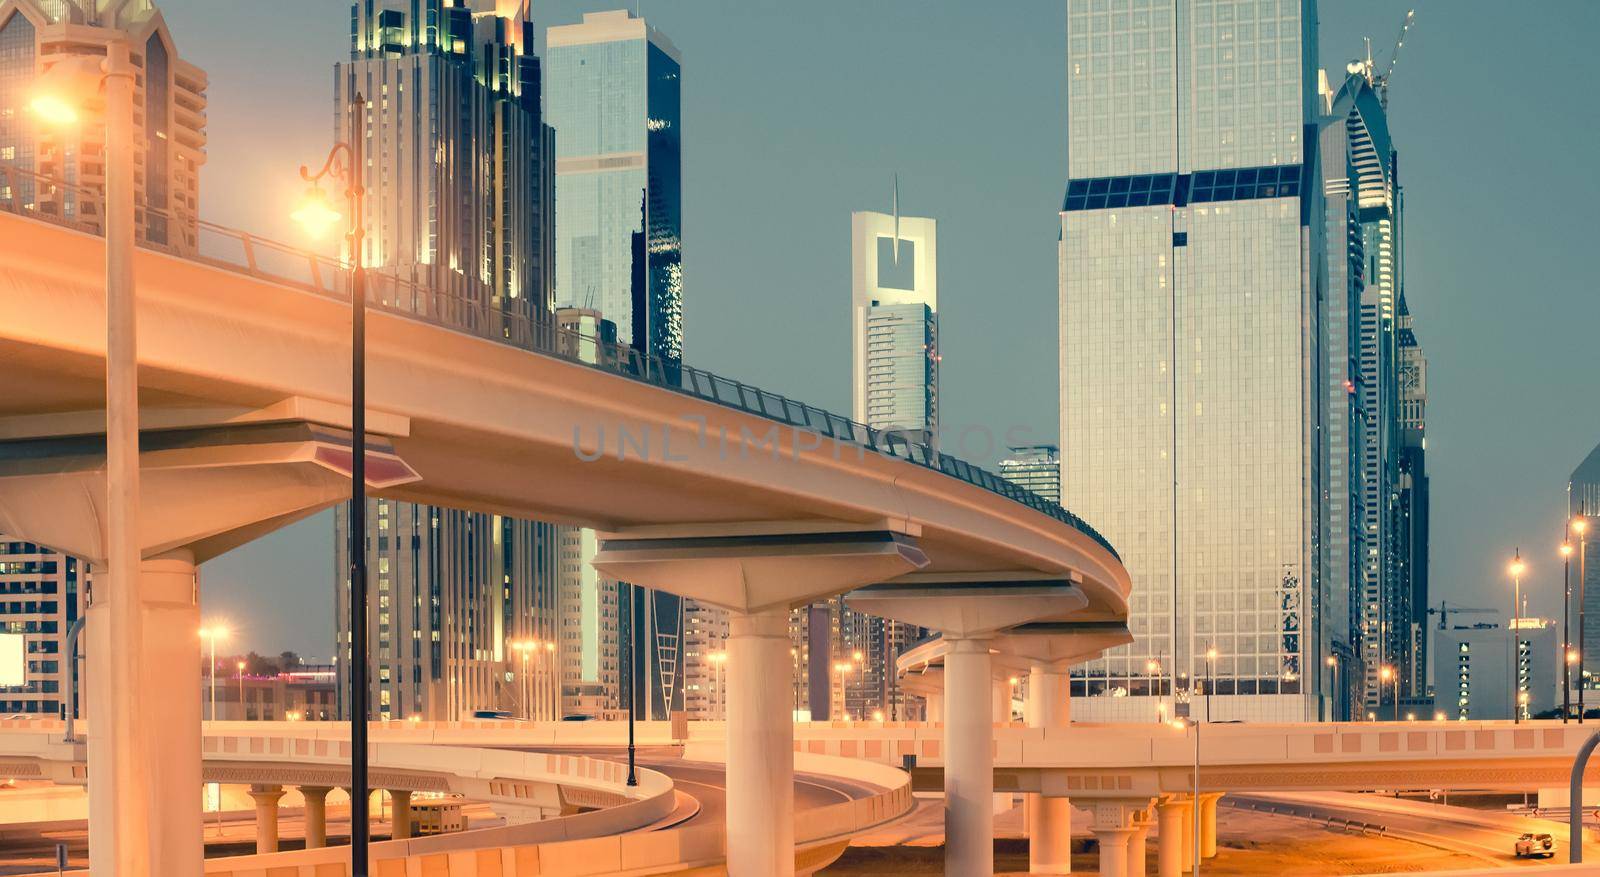 Skyscraper roads and bridge at the Sheikh Zayed Road in Dubai in the evening, United Arab Emirates